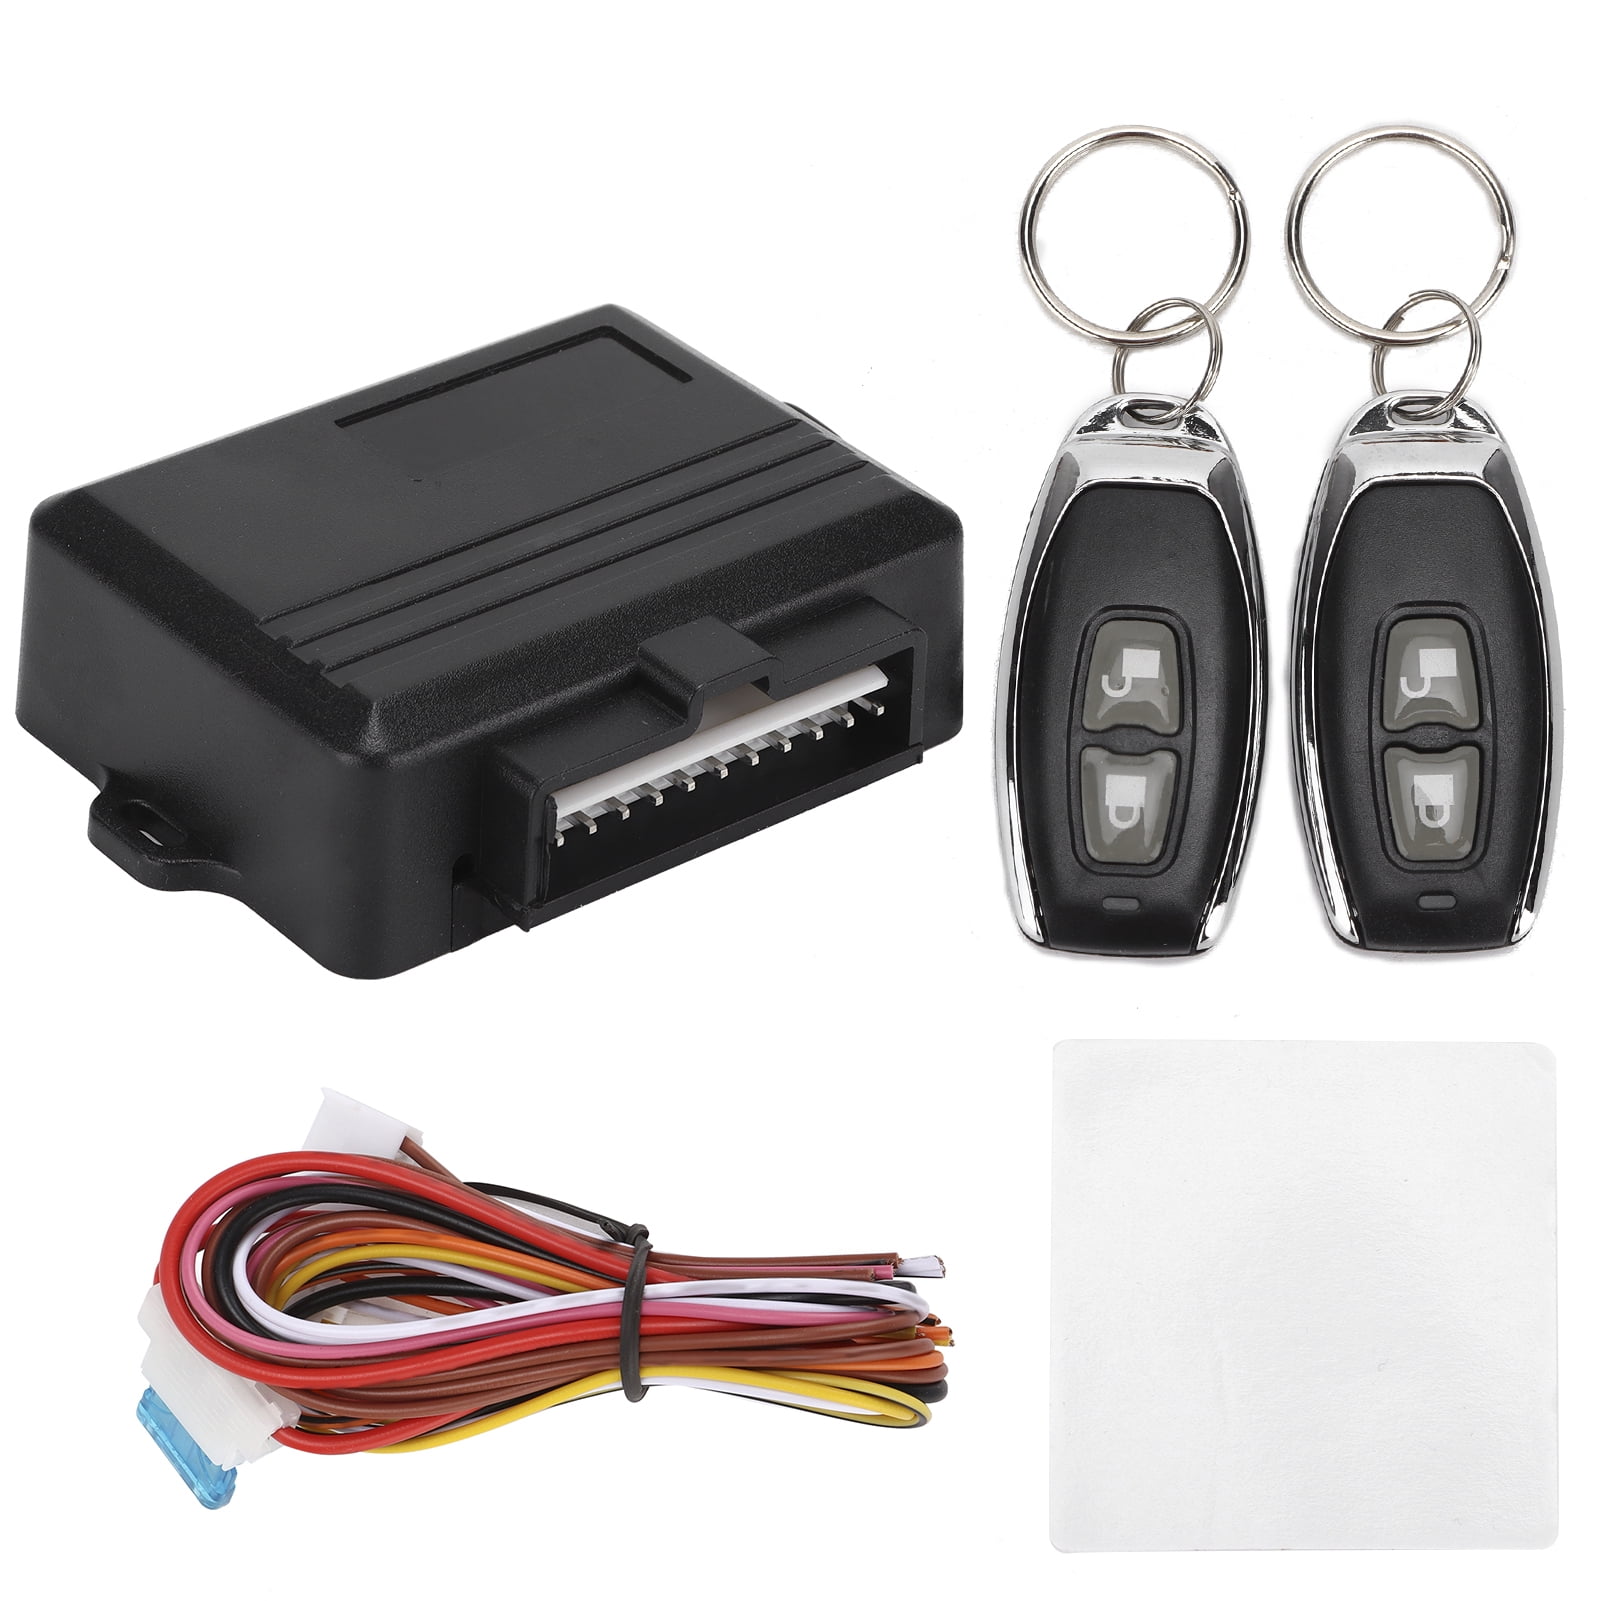 EBTOOLS Car Remote Central Lock Locking Keyless Entry System,Car Universal Door Remote Keyless Entry Central Lock Kit System with Light Anti-Theft Device 